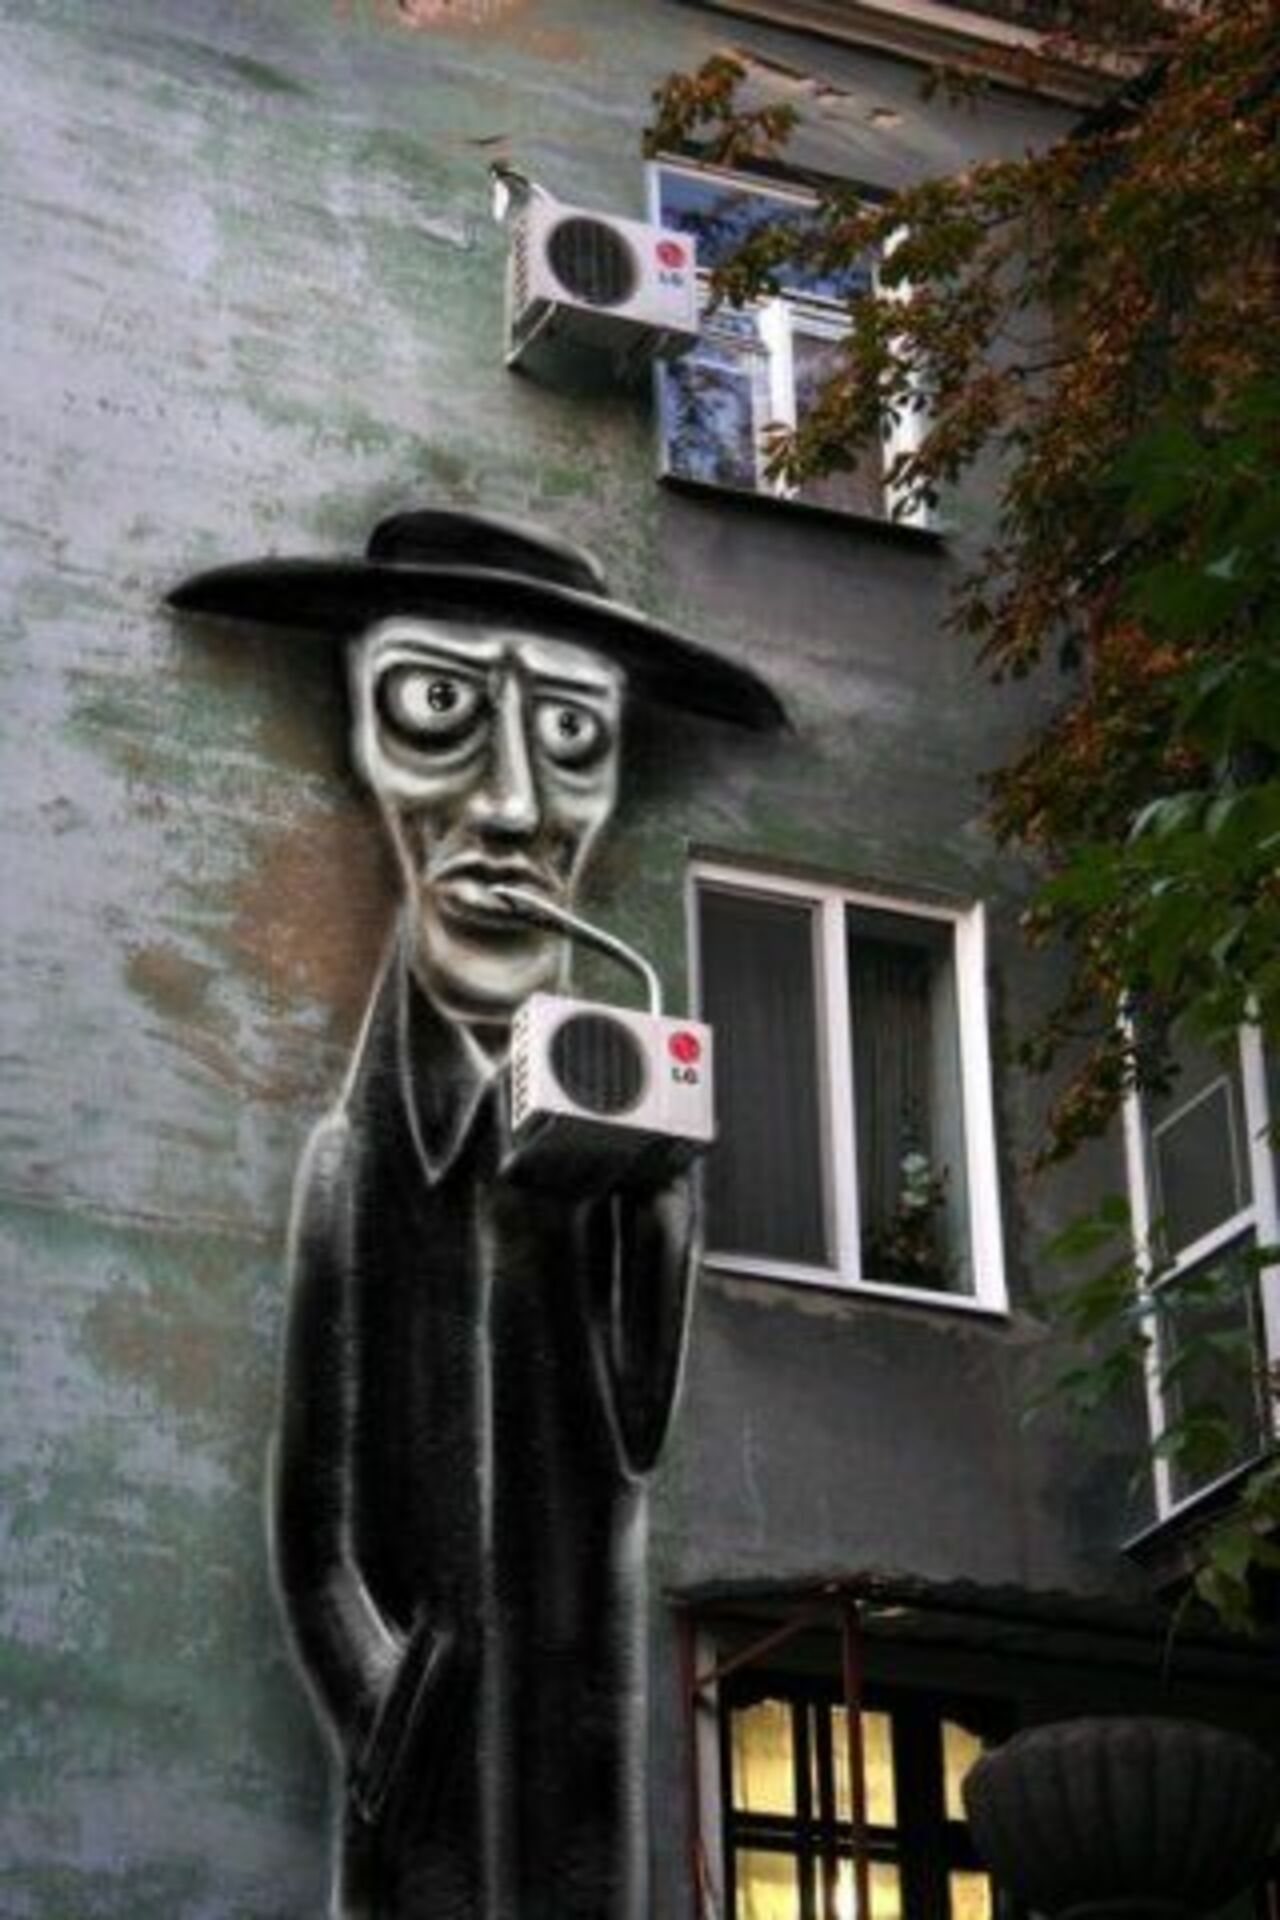 Design Conditioner by Borodox#streetart #mural #graffiti #art https://t.co/eVH3DGGHaq